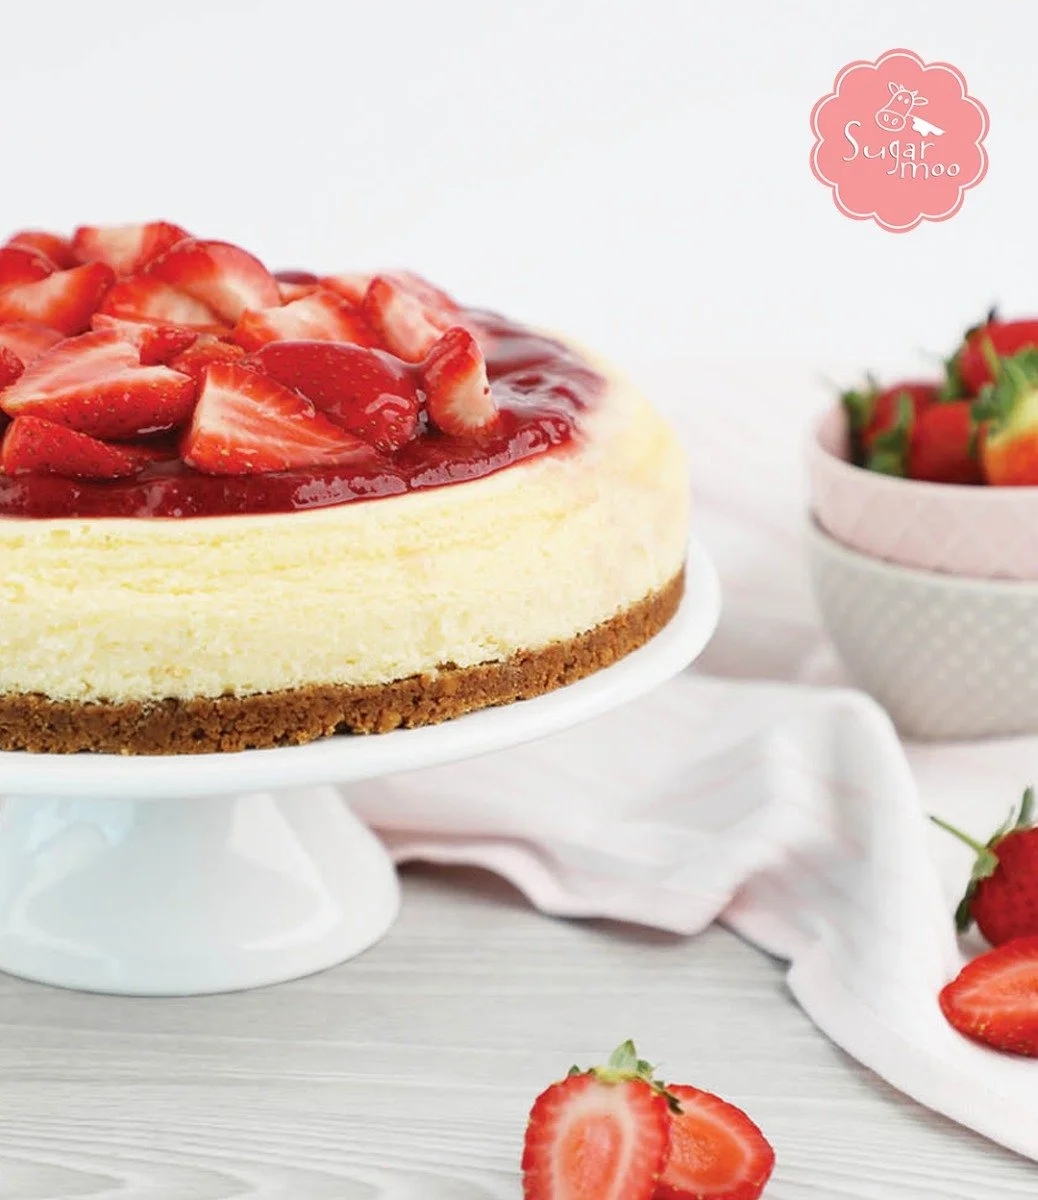 Strawberry Cheesecake by Sugarmoo